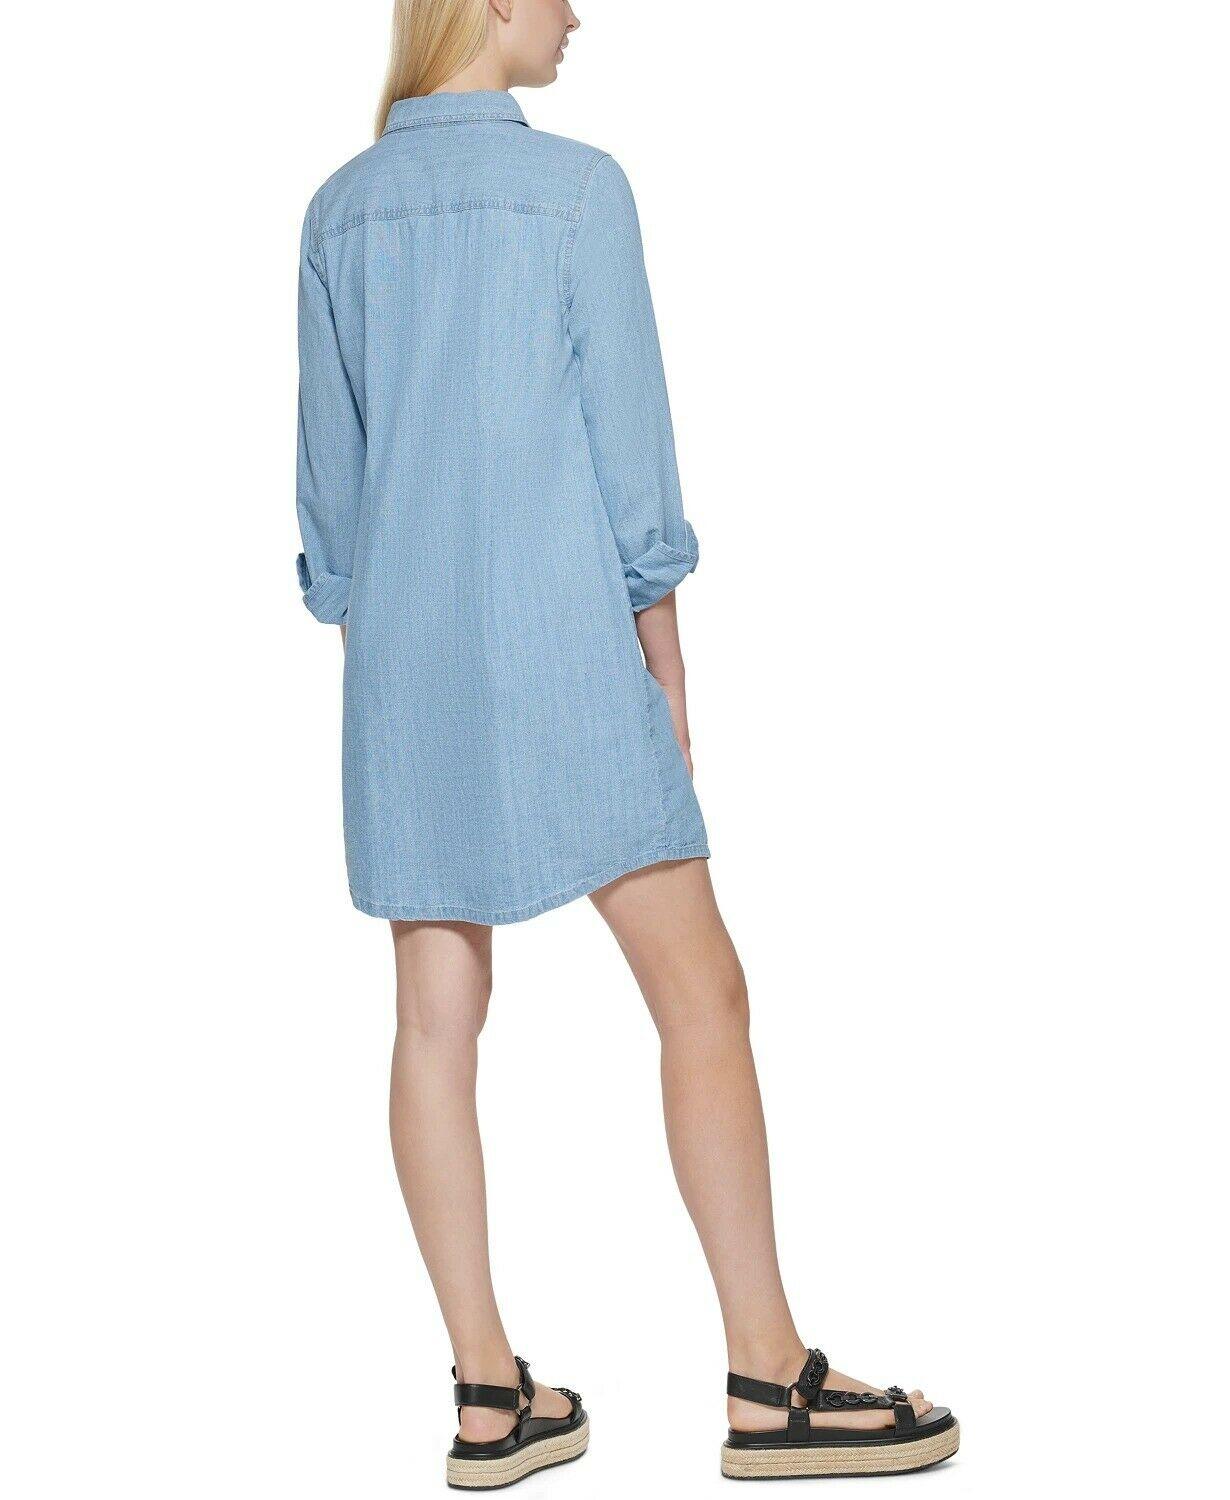 Karl Lagerfeld Paris Women's Button Down Denim Shirtdress Blue Size Small - SVNYFancy